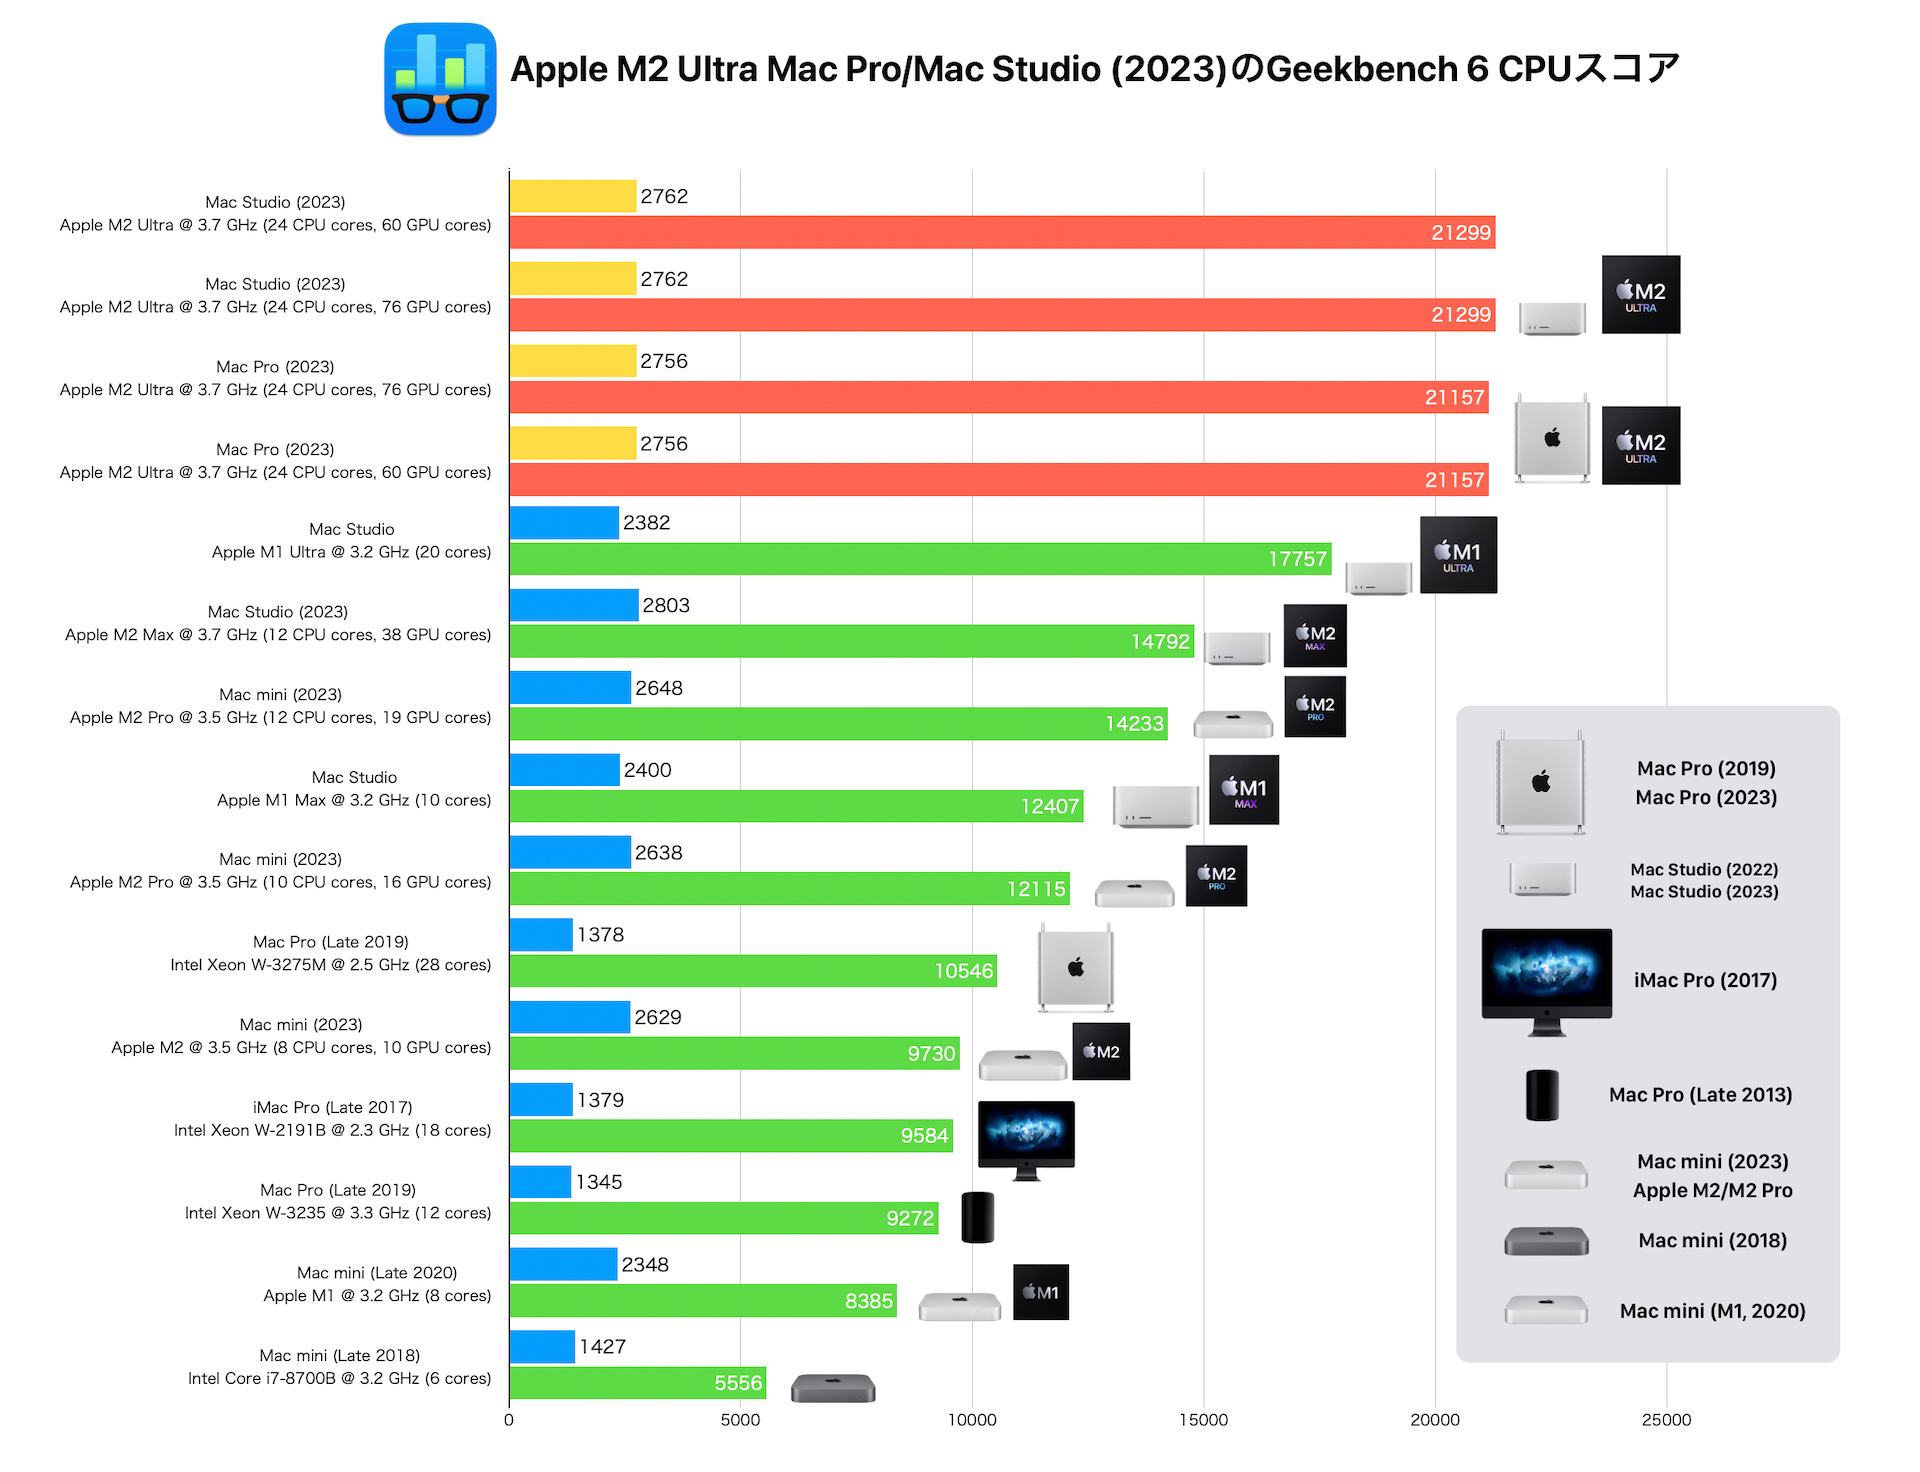 Apple M2 Ultraチップ搭載のMac Studio/Mac Pro (2023)のGeekbenchスコア